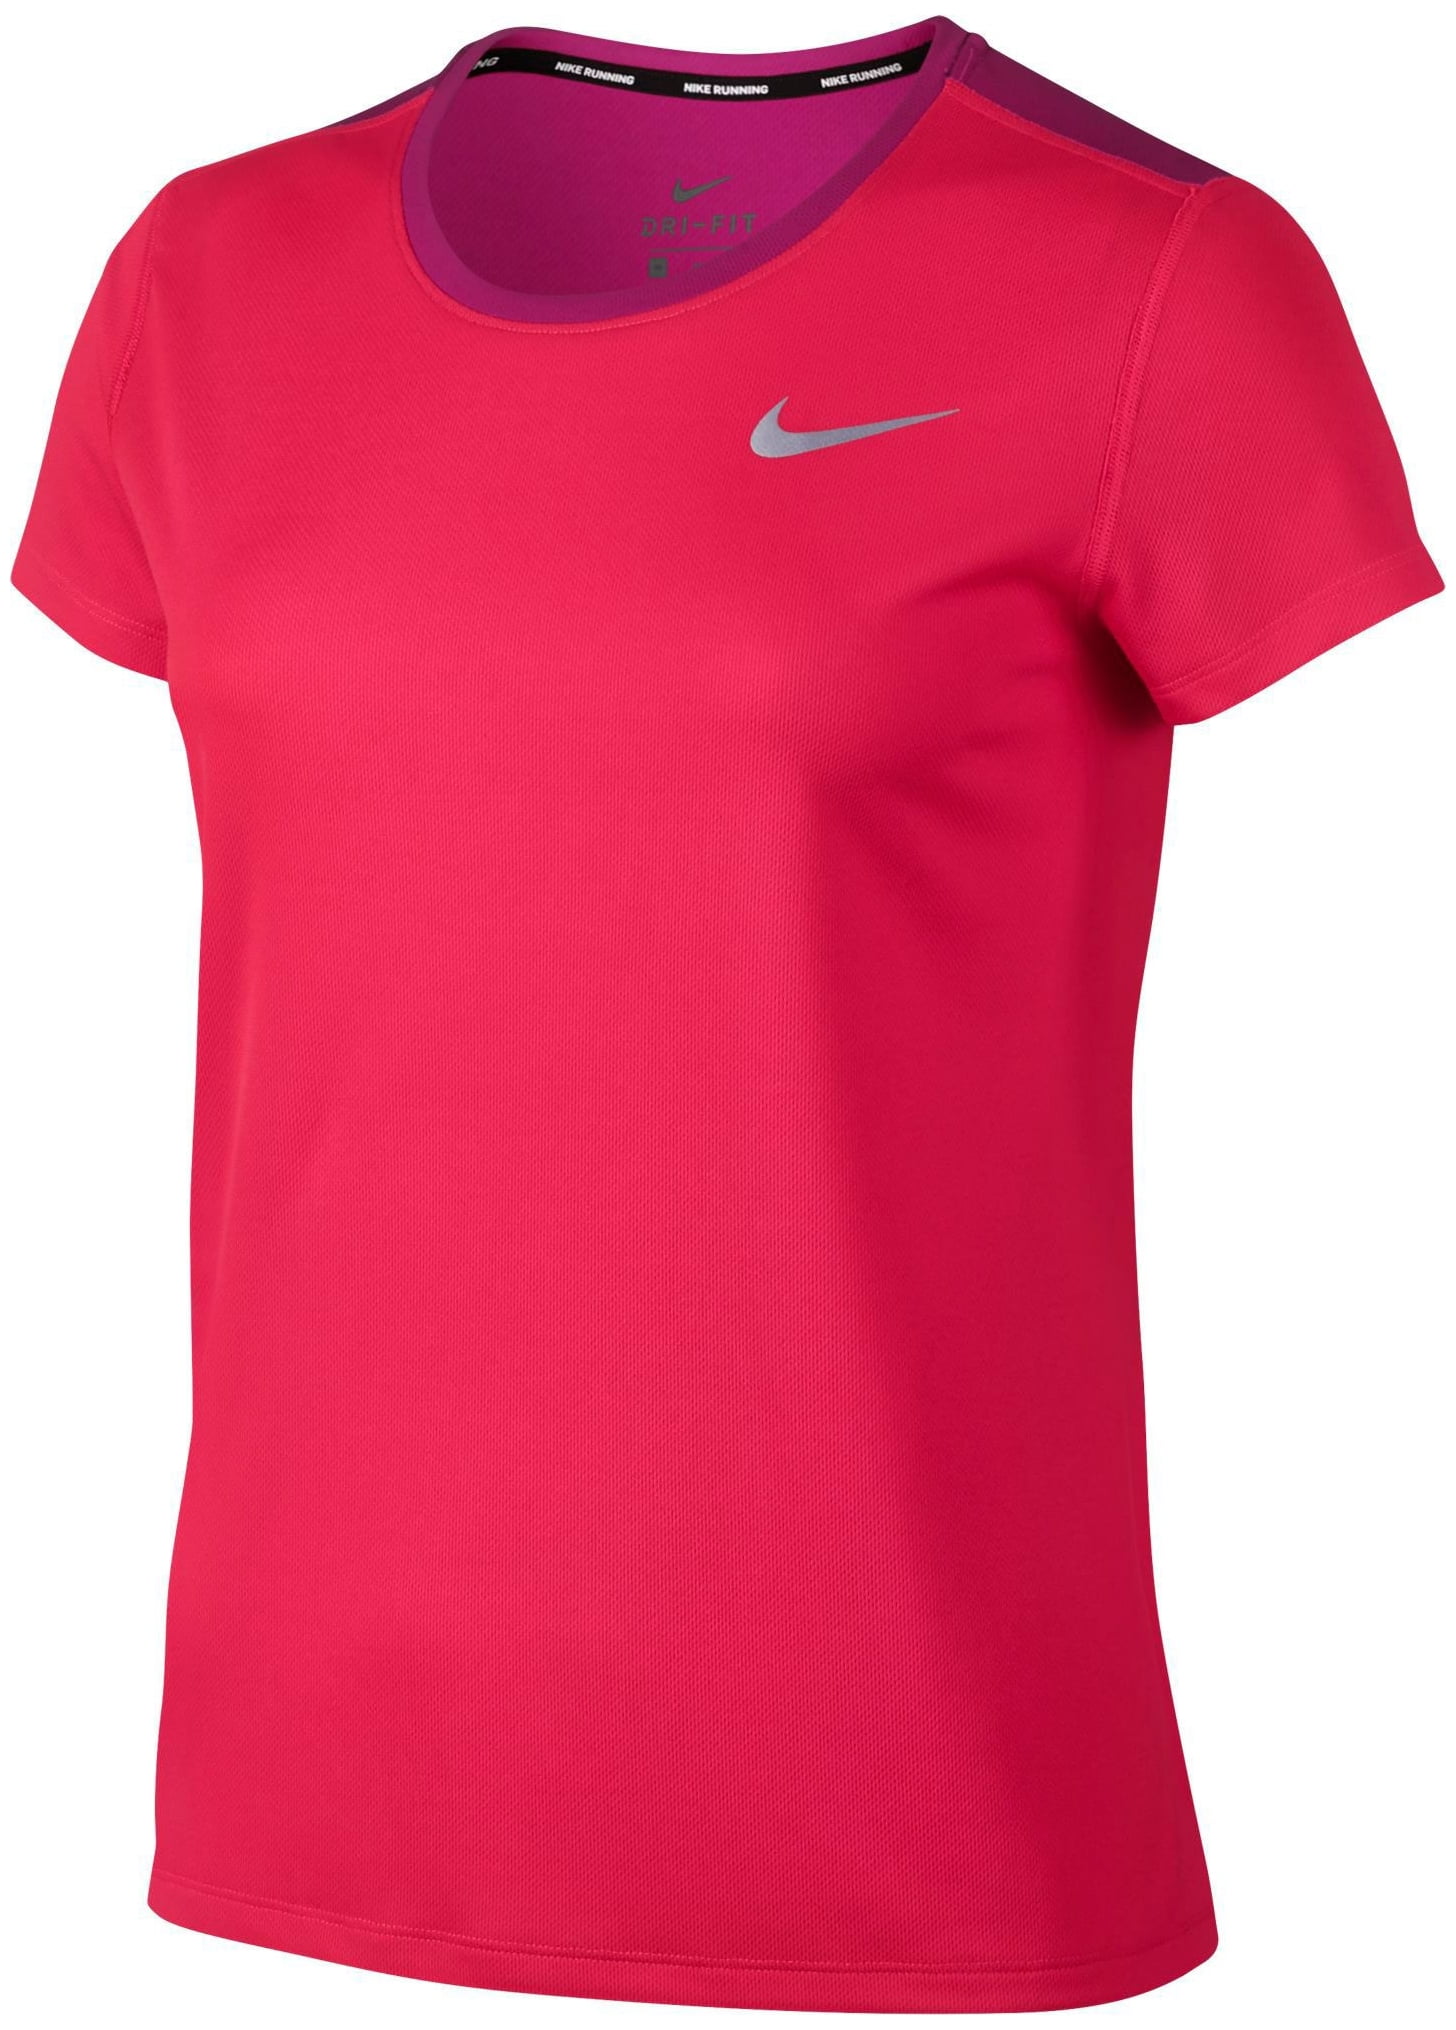 Nike Women's Breathe Rapid Running T-Shirt - Racer Pink - Size M ...